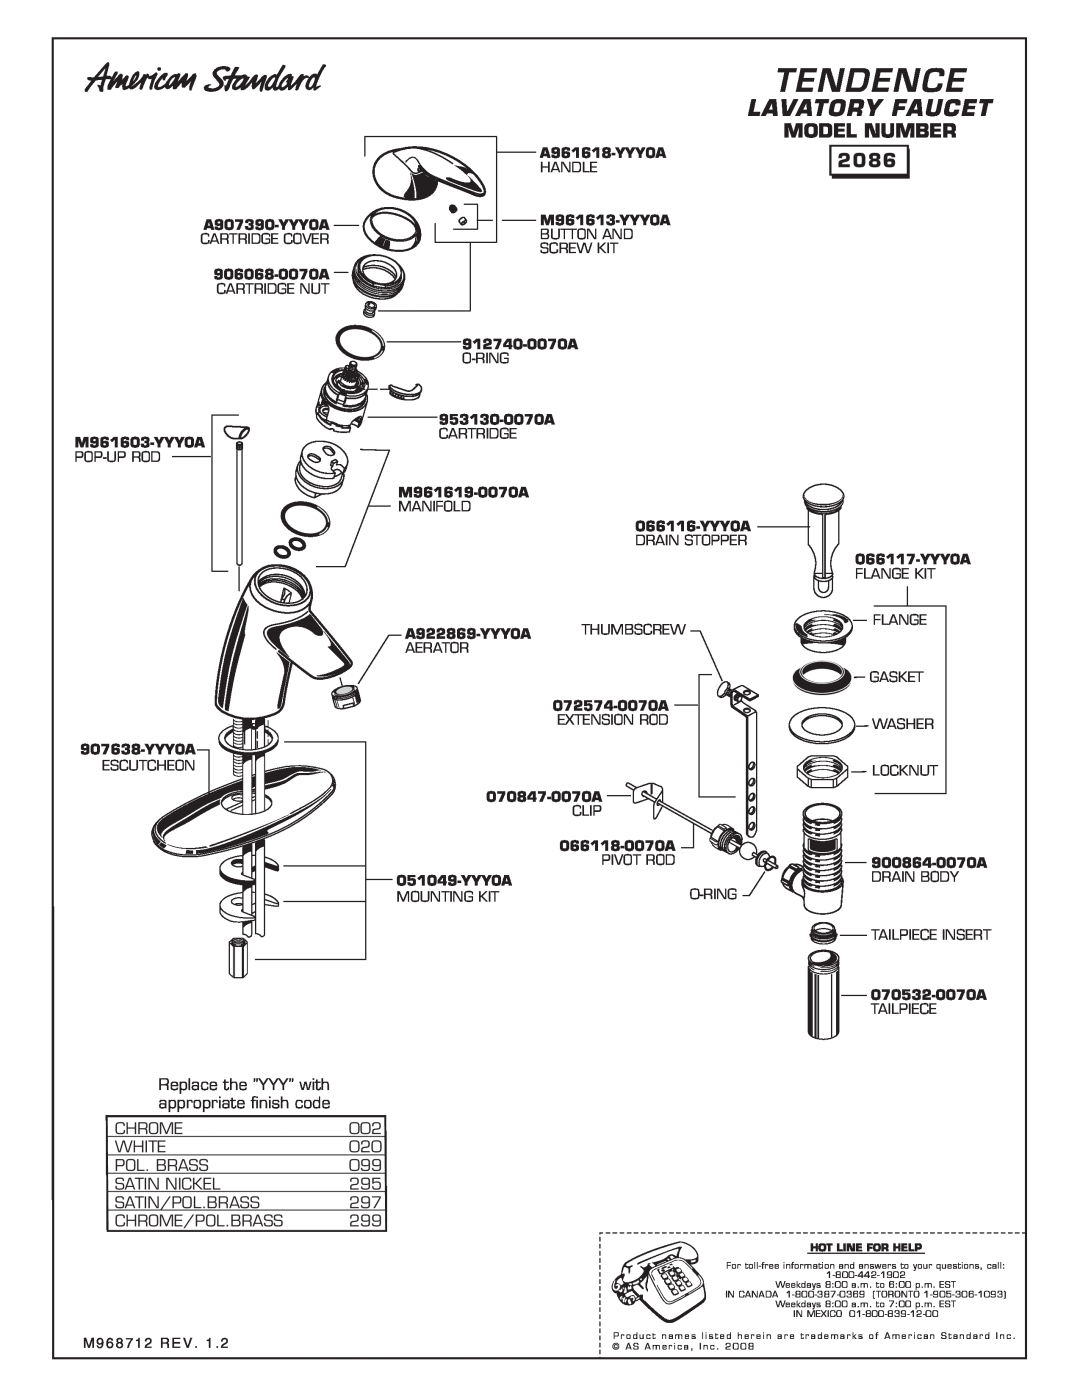 American Standard 2086 manual Tendence, Lavatory Faucet, Model Number 